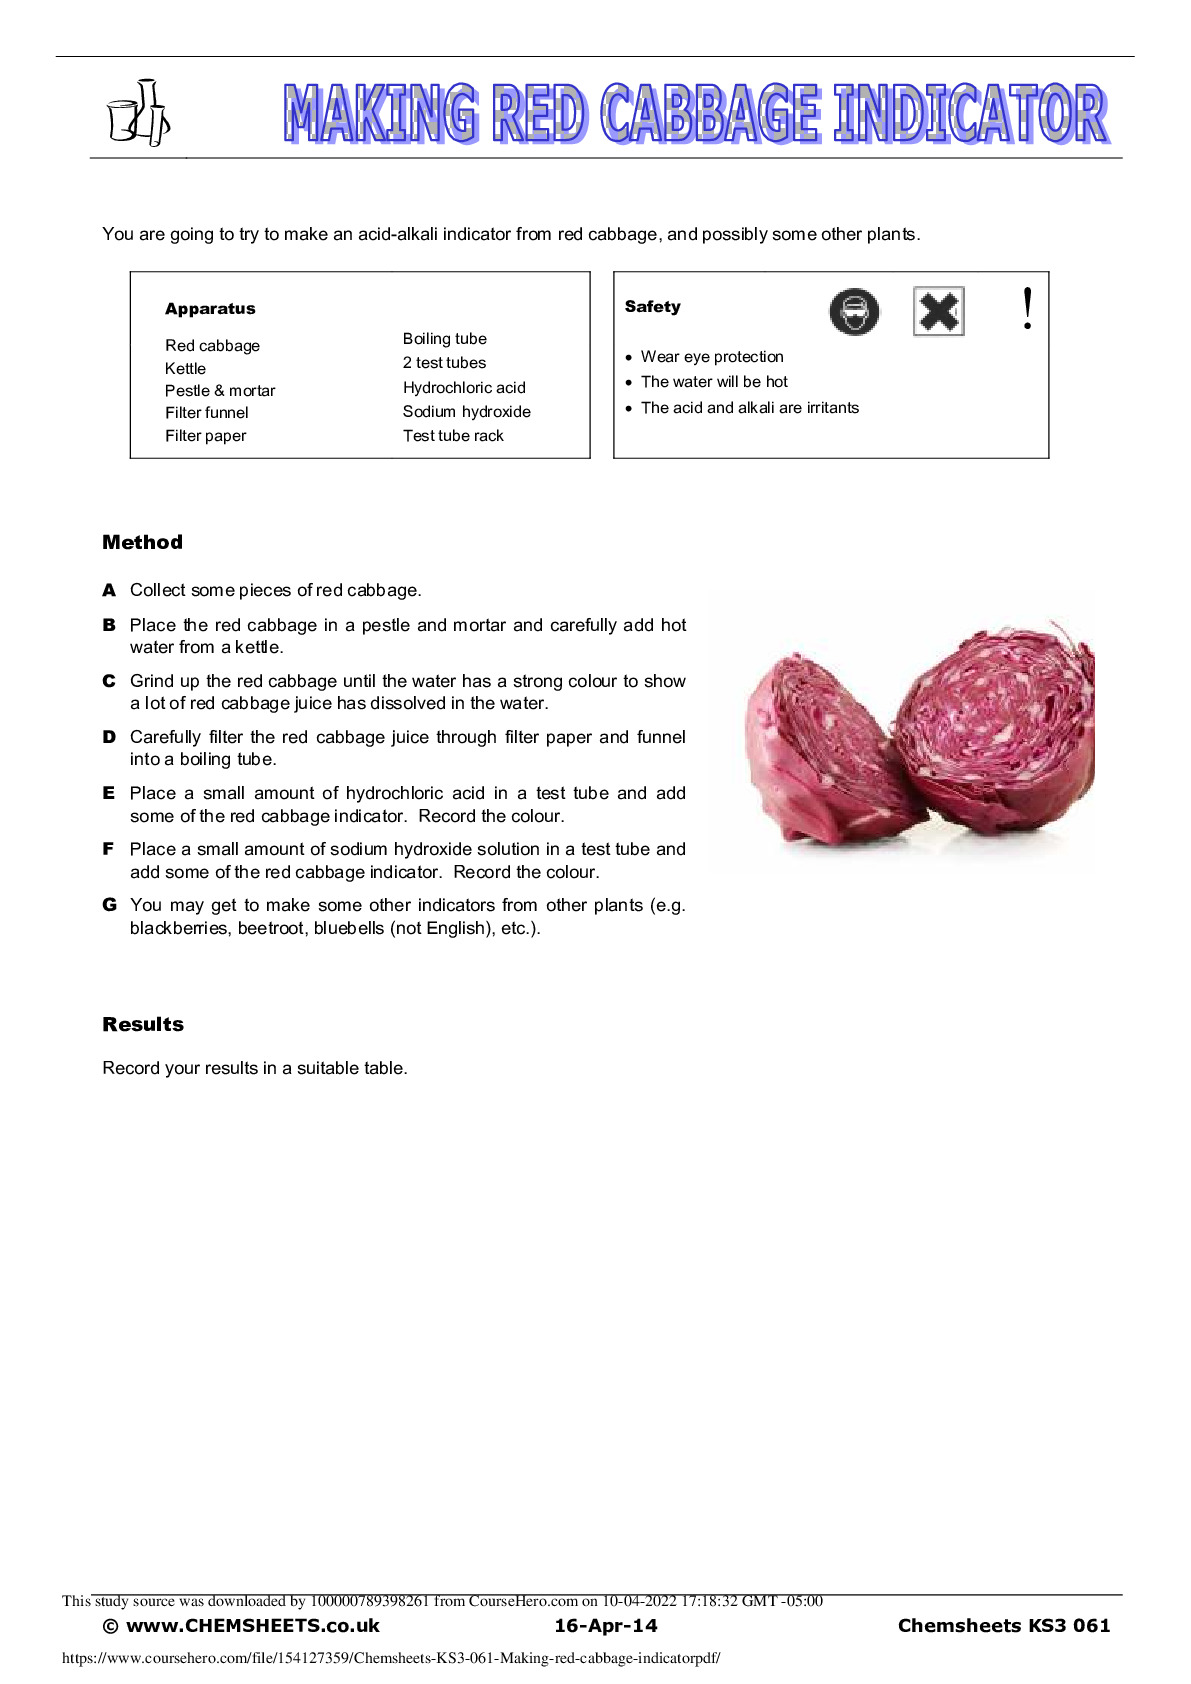 Chemsheets_KS3_061_Making_red_cabbage_indicator.pdf